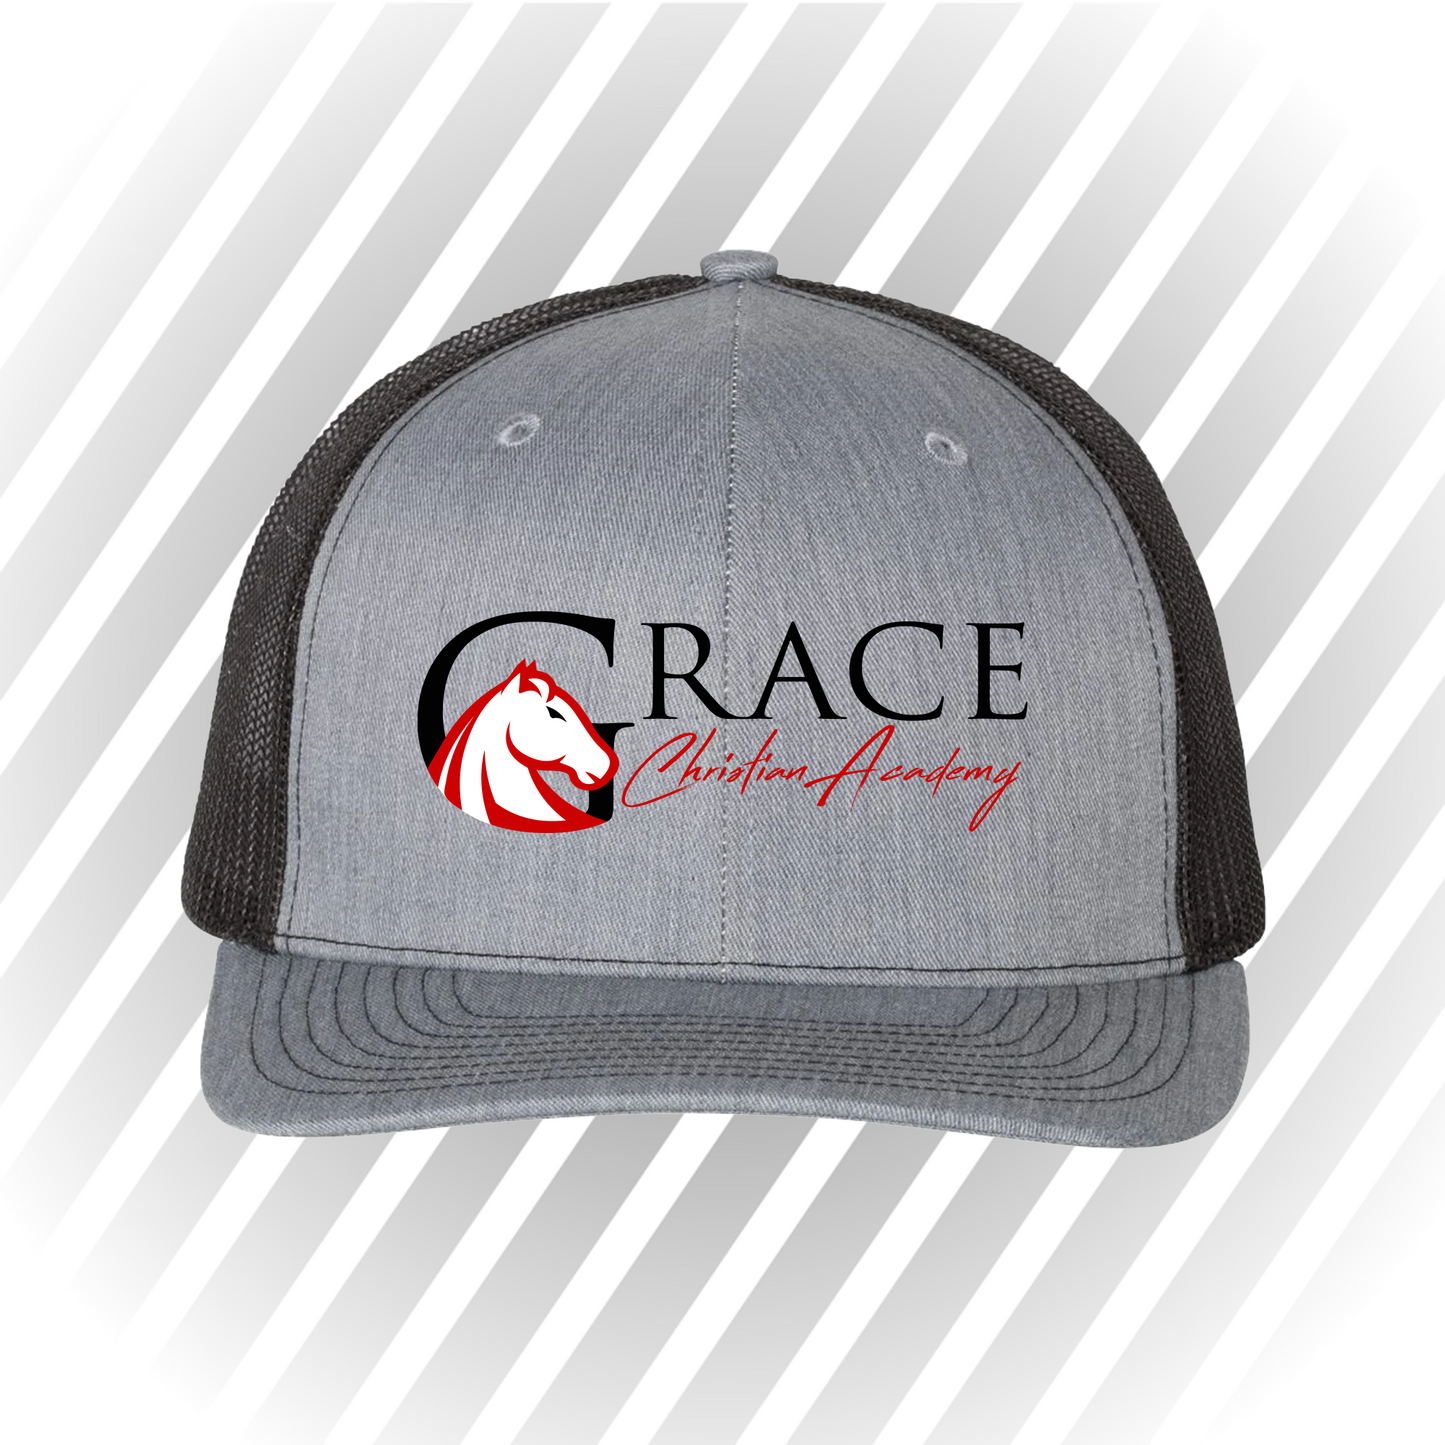 Grace Christian Academy - Trucker Hat